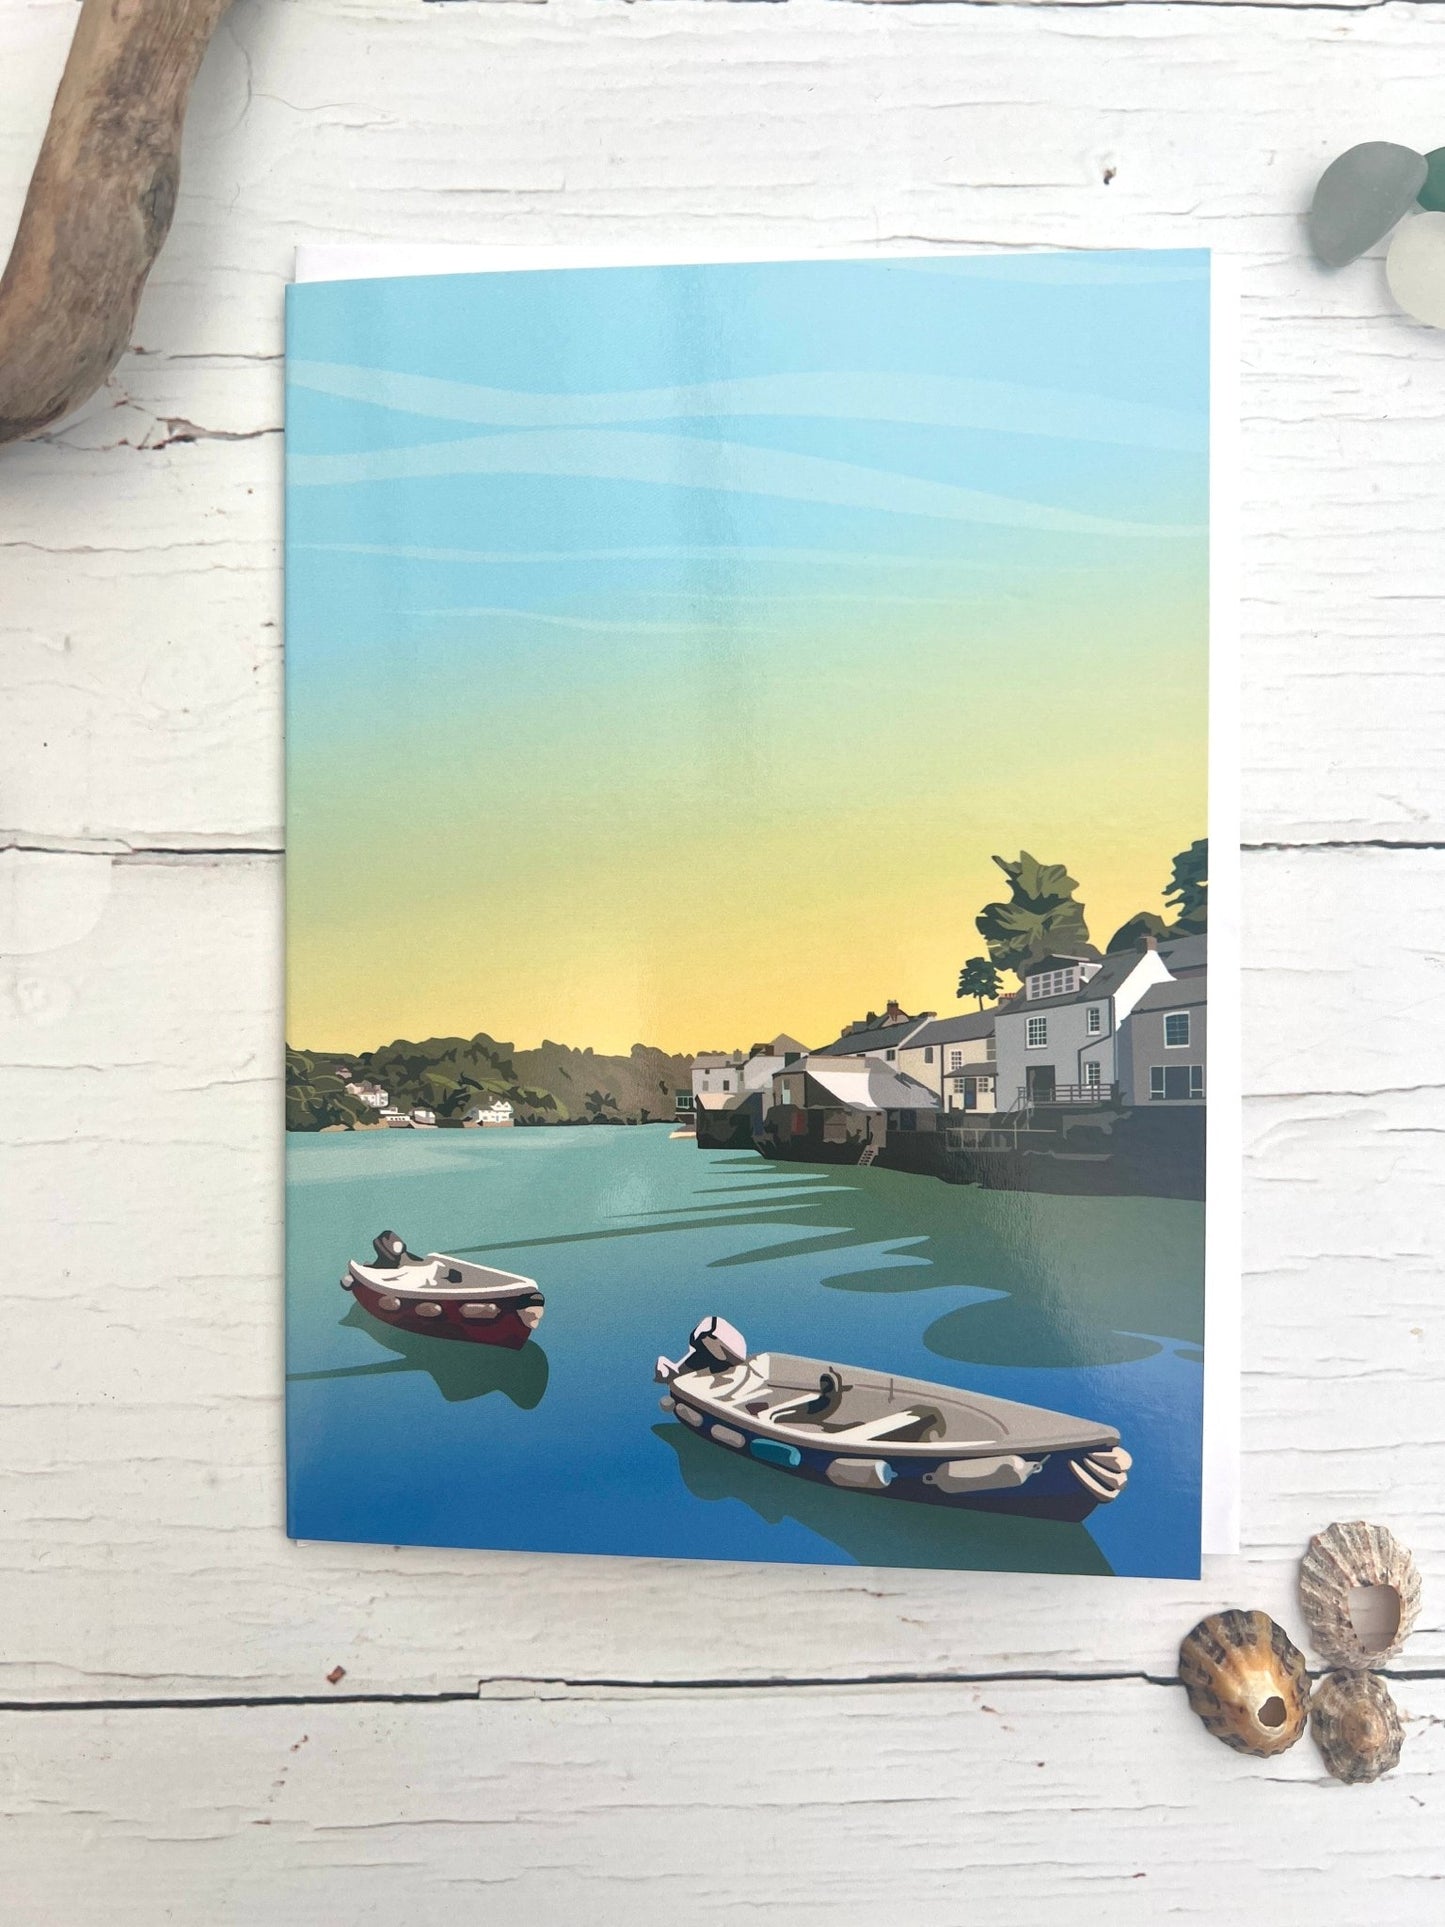 Readymoney Cove & Fowey Digital Art Greetings Cards - Readymoney Beach Shop